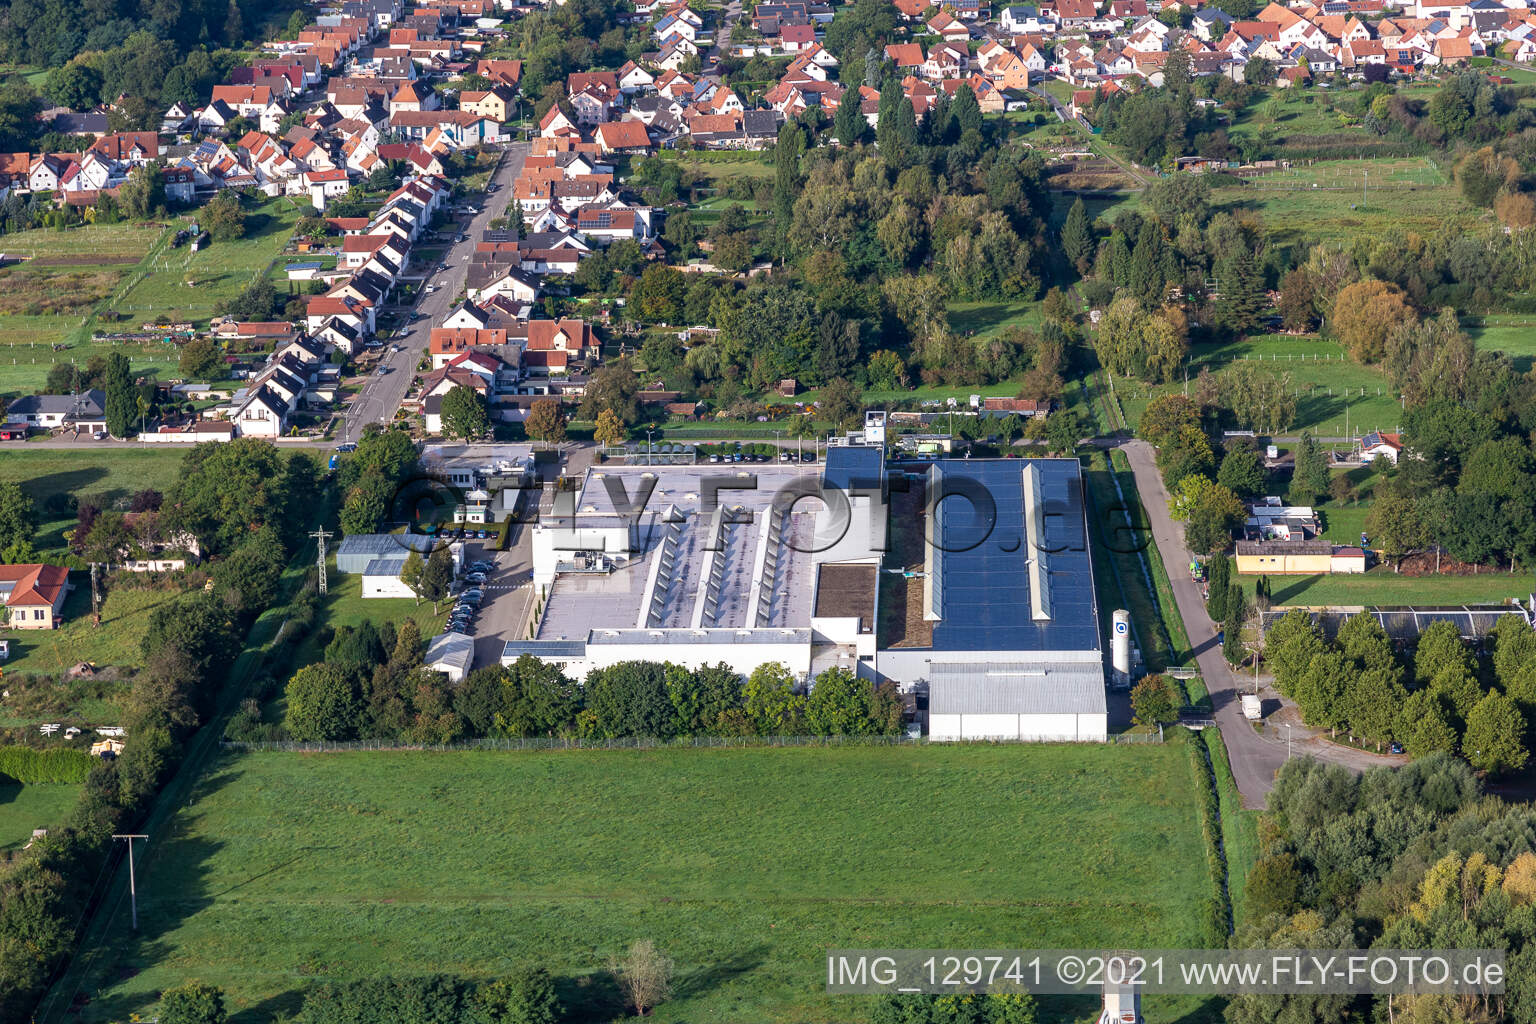 Drone recording of Webasto Mechatronics in the district Schaidt in Wörth am Rhein in the state Rhineland-Palatinate, Germany